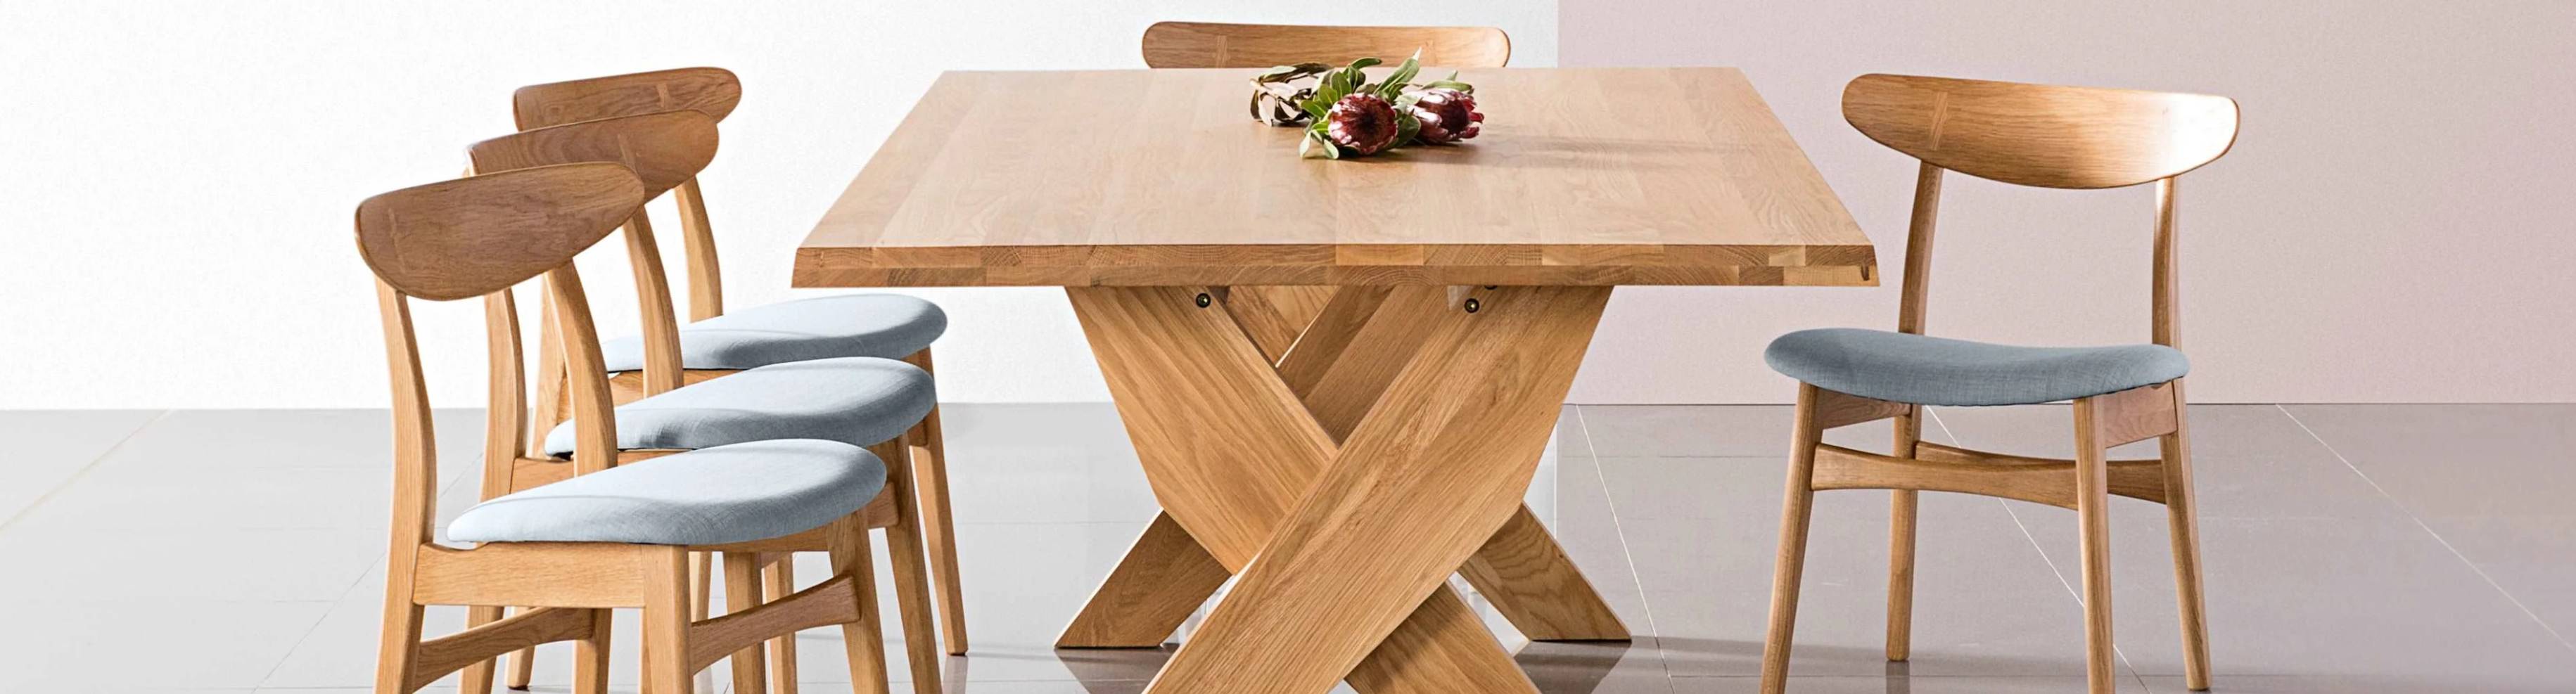 scandinavian dining table